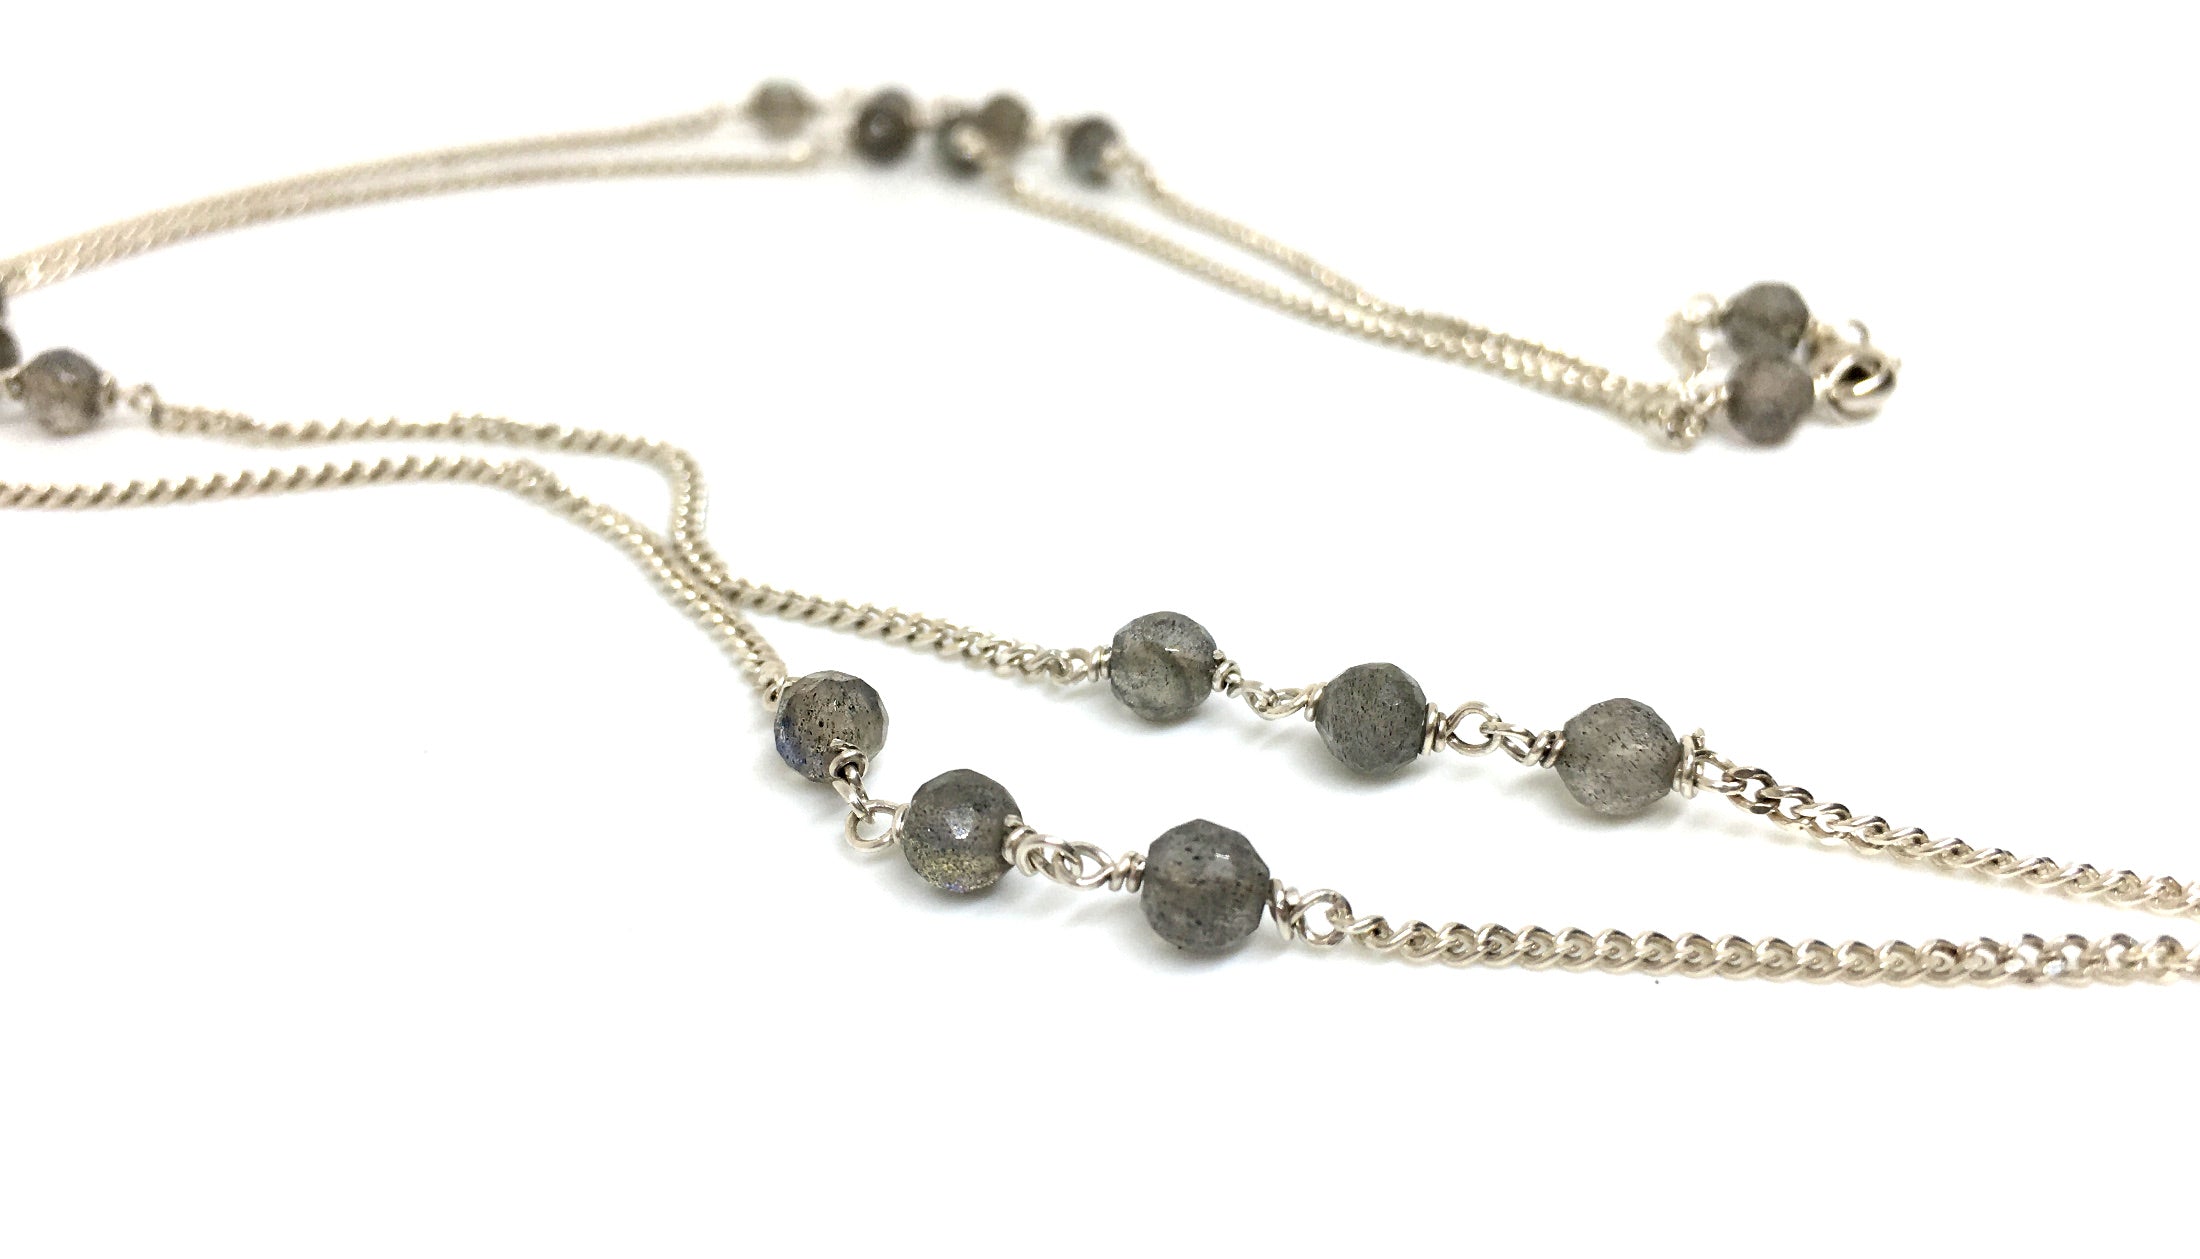 Handmade Filigree Pendant Necklace with Labradorite